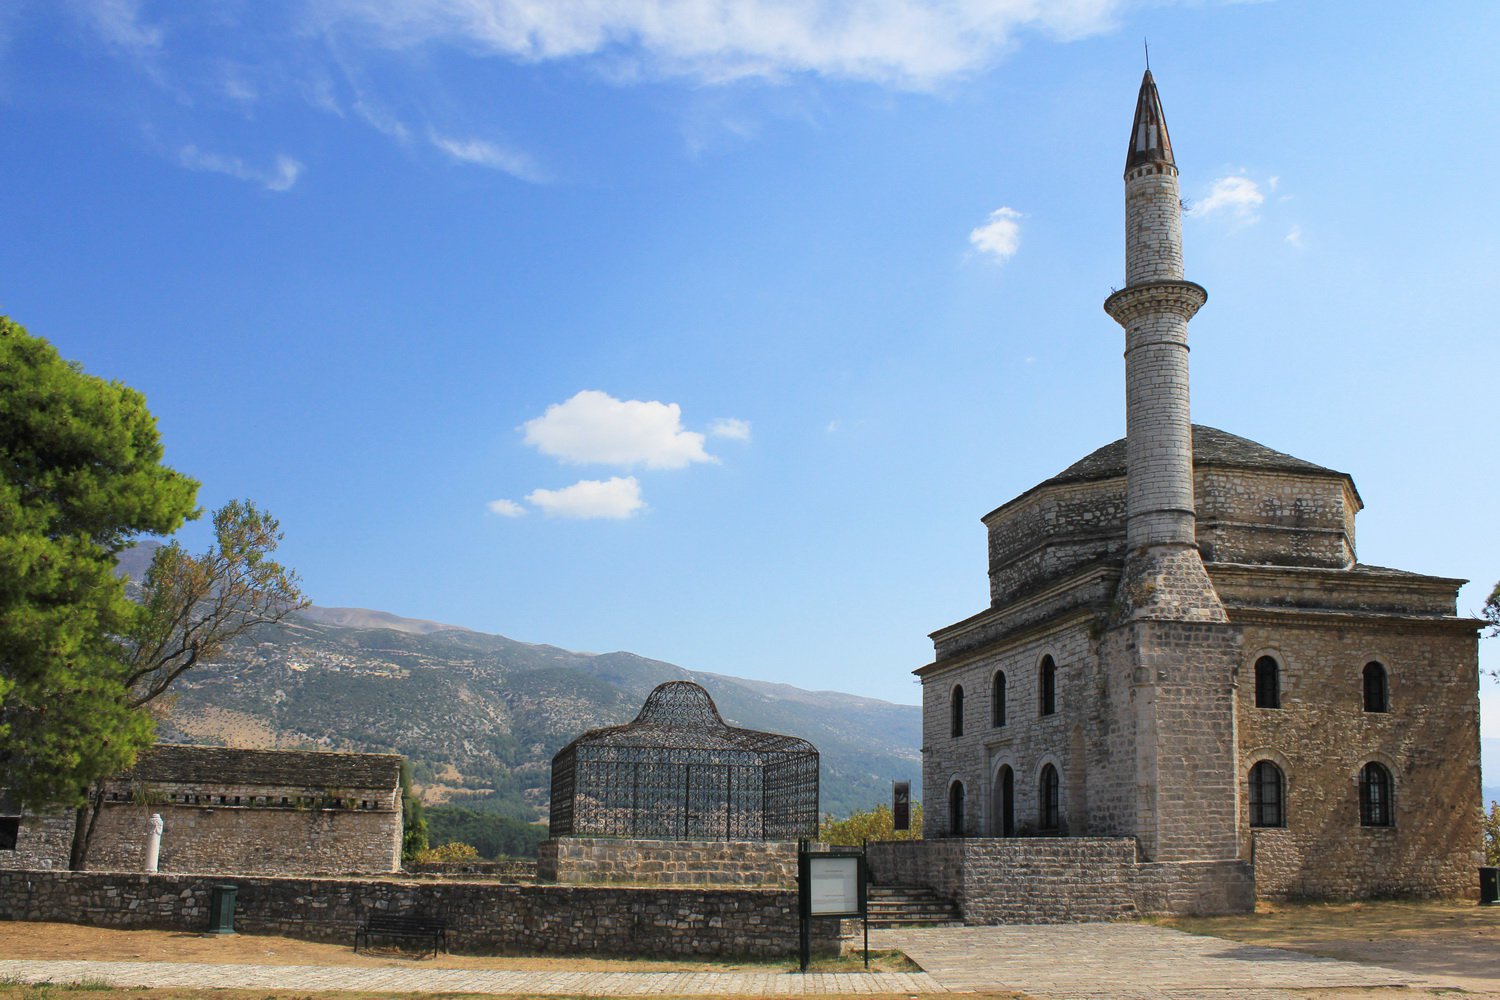 The Ali Pasha's Tomb